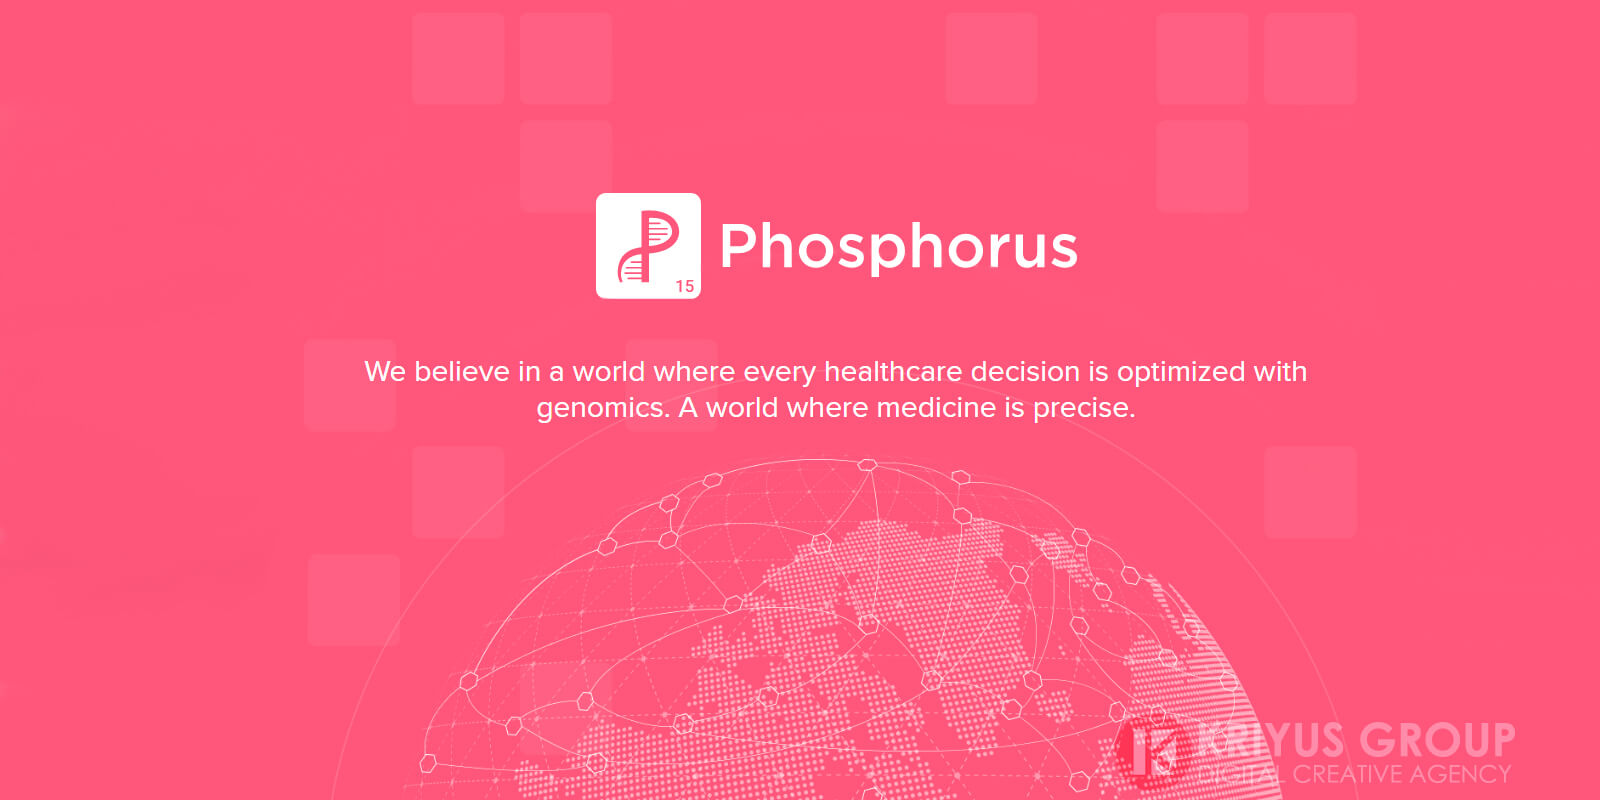 Kriyus Our Work - Phosphorus